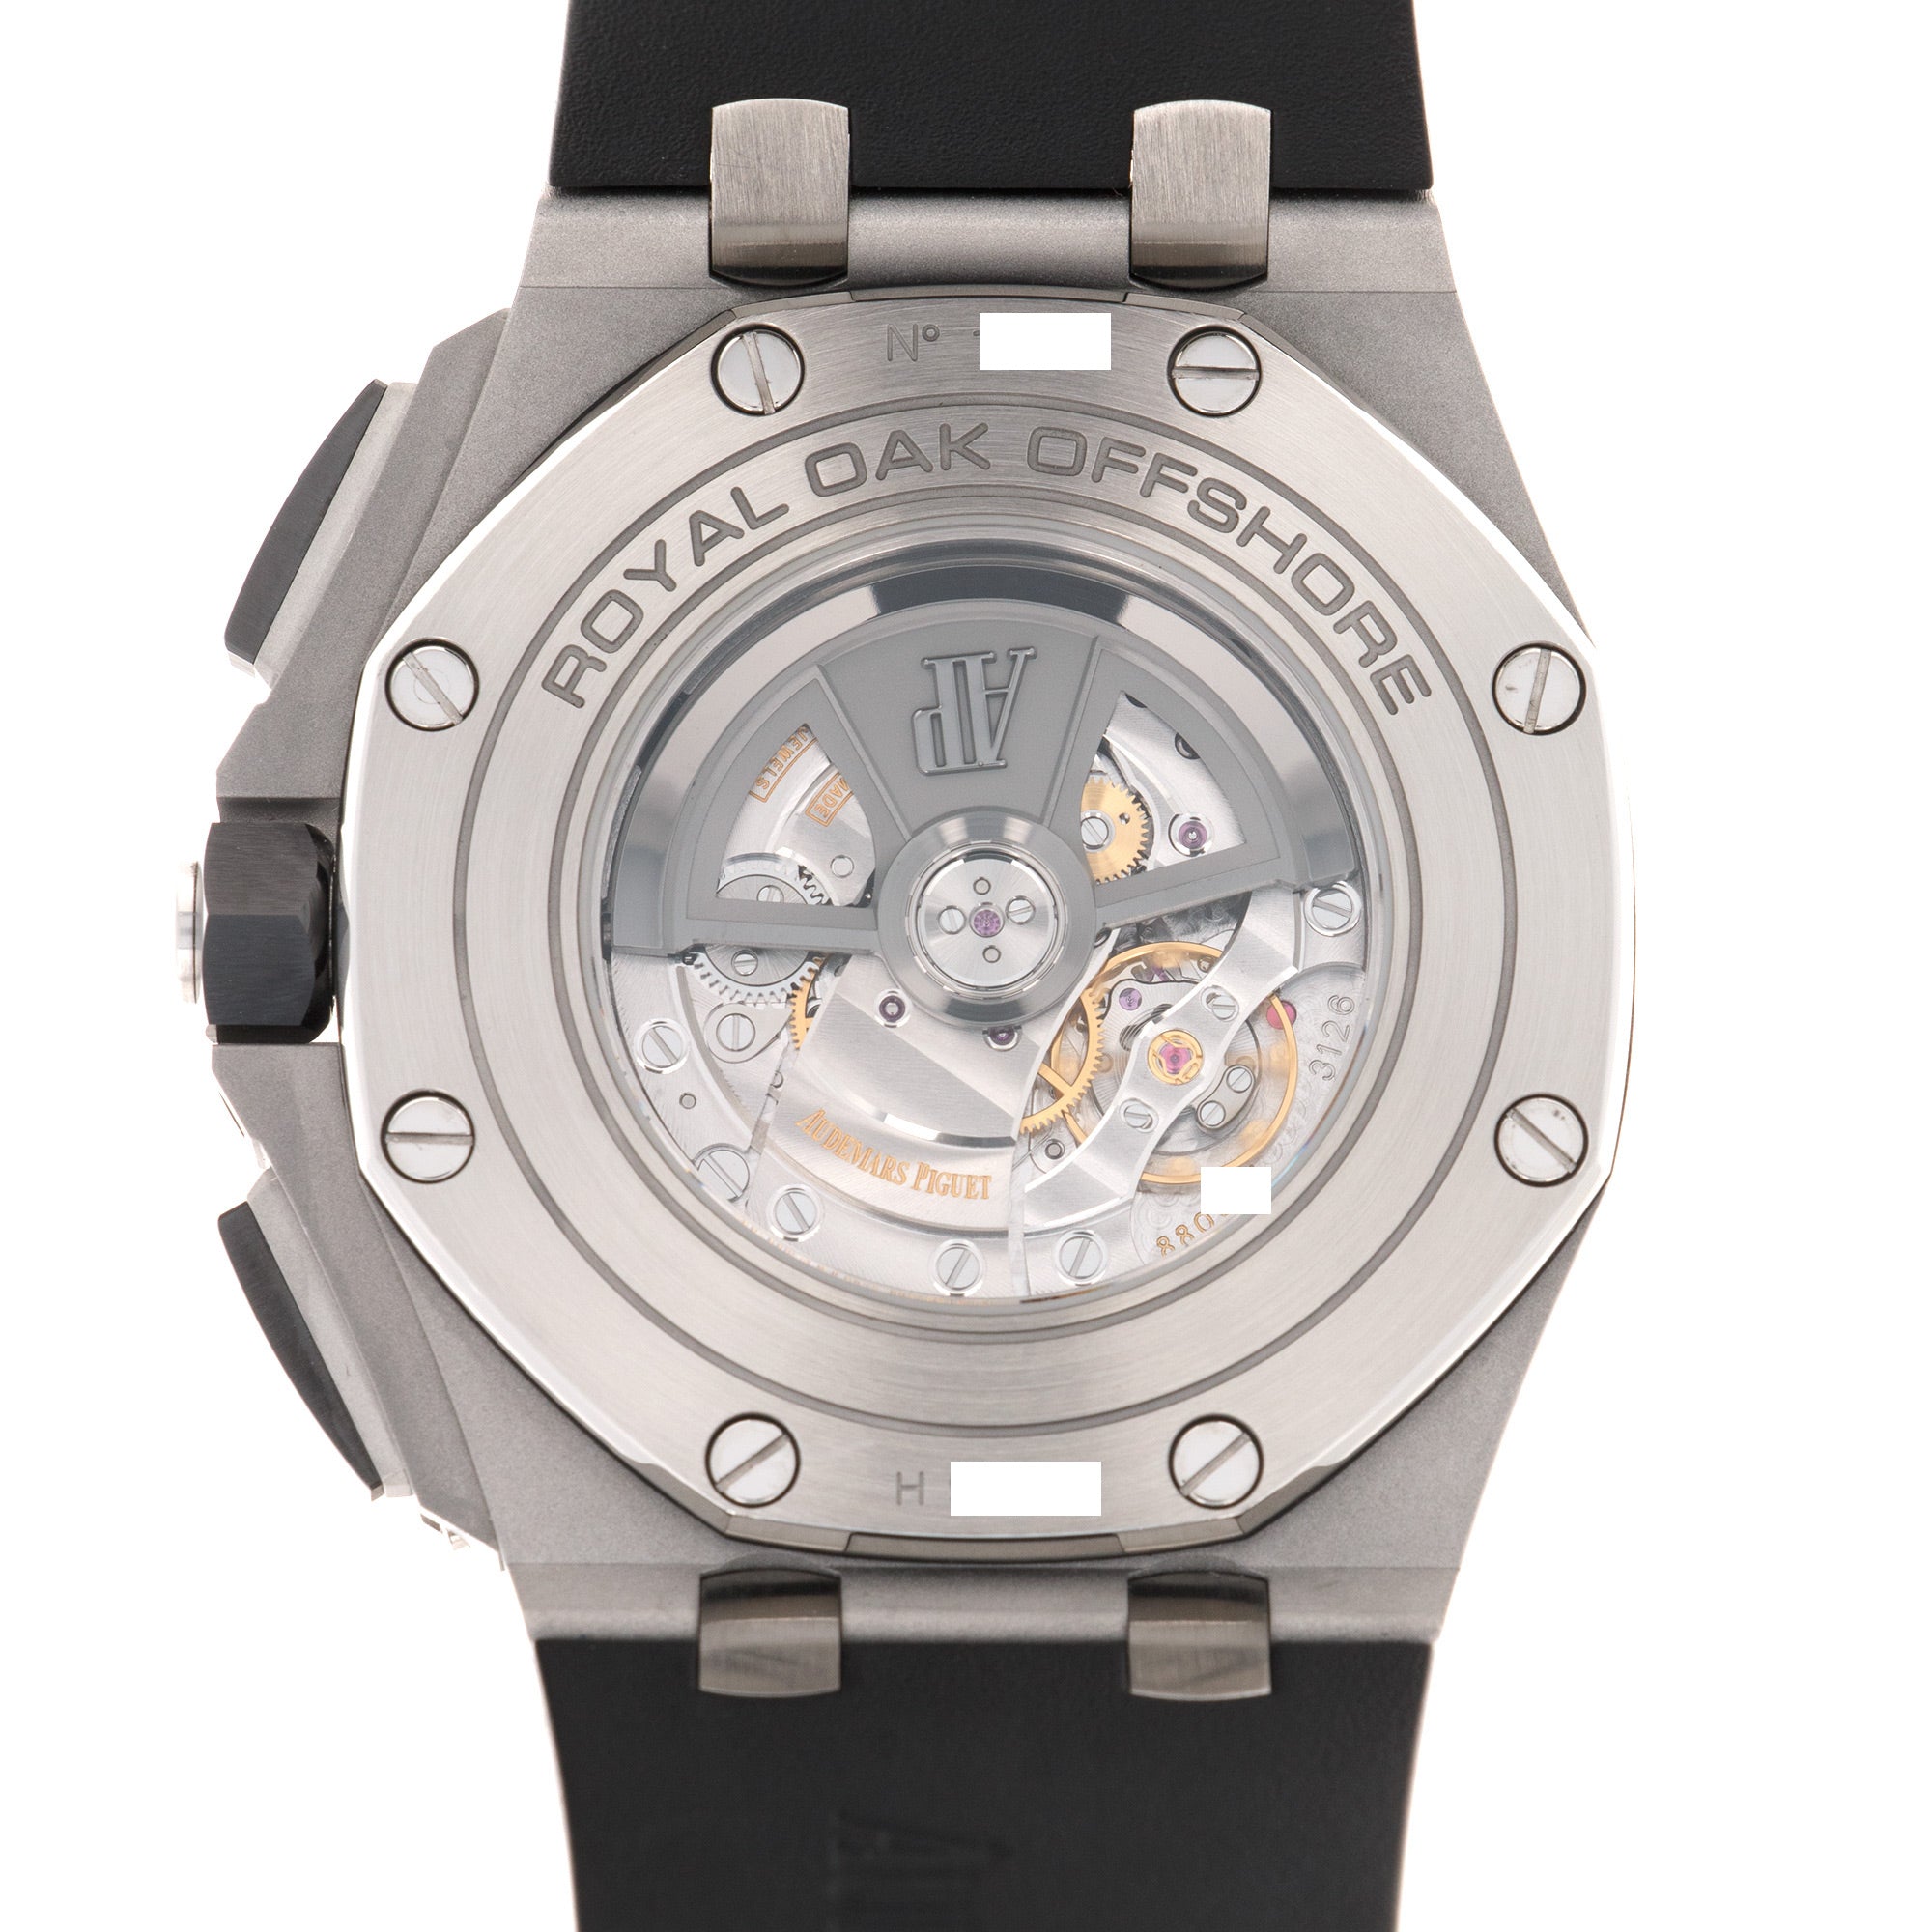 Audemars Piguet Royal Oak Offshore Chronograph Watch Ref. 26400